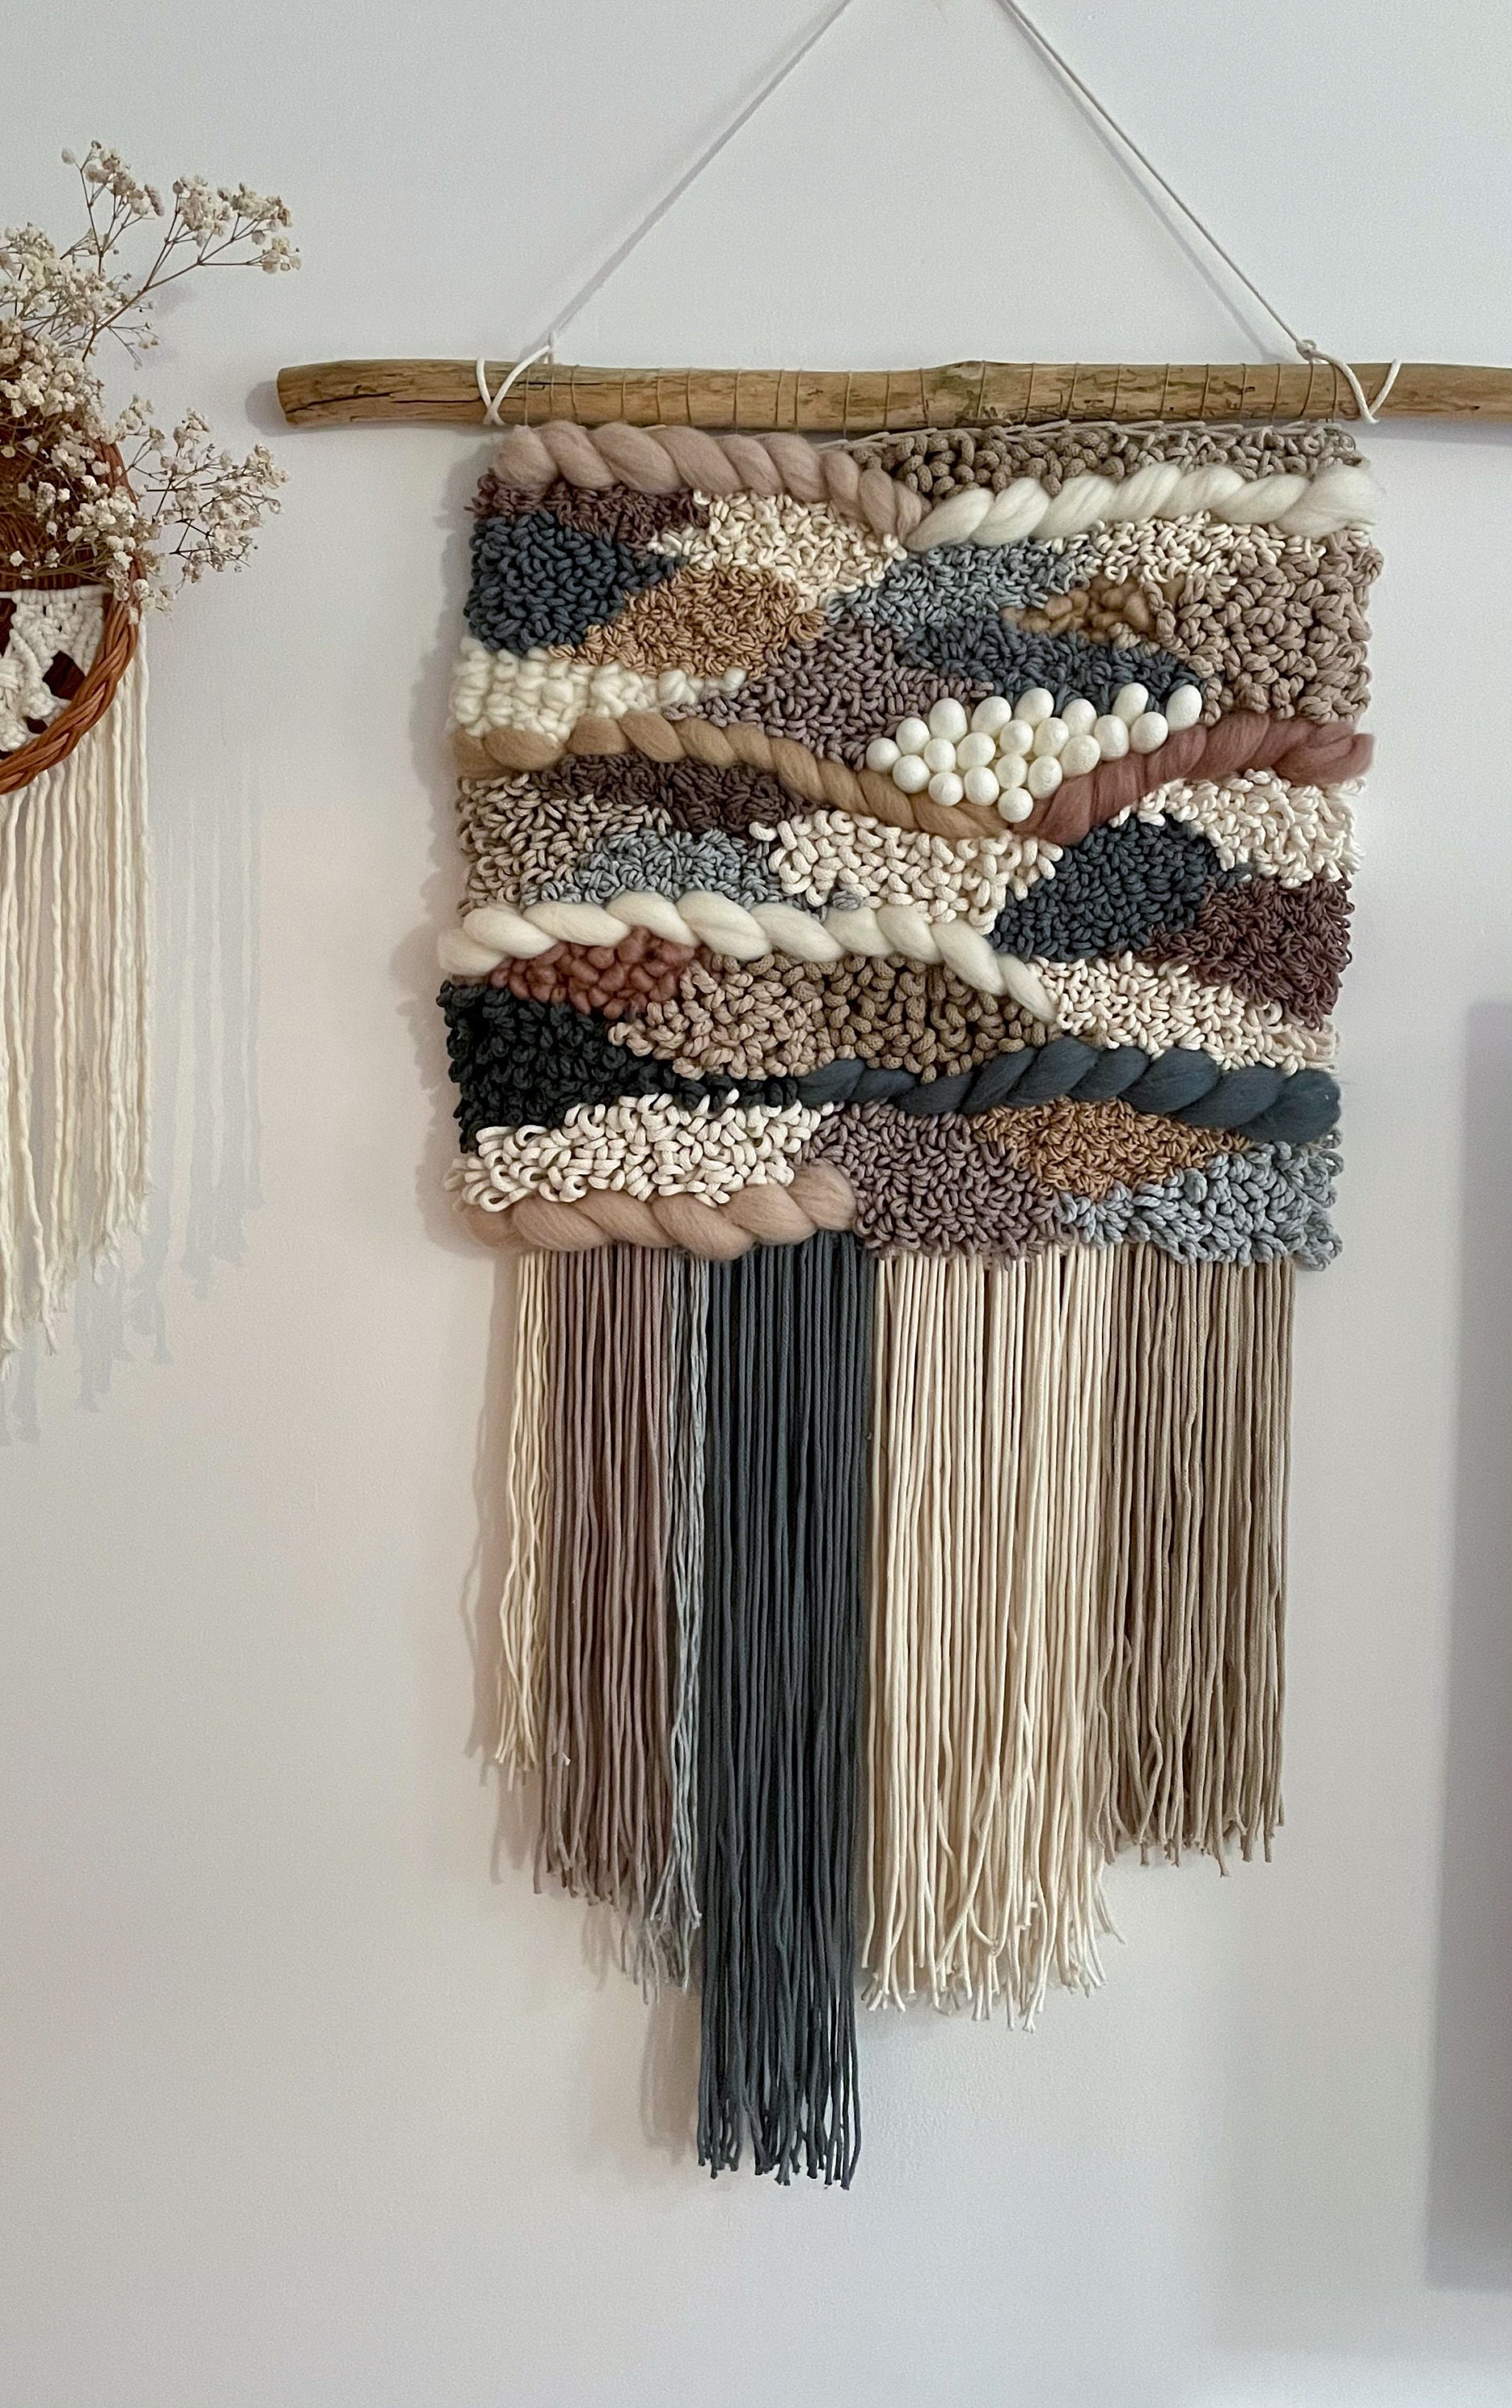 XXL Wire Crochet Loom, Mandala Loom, Wire Work, Wall Art, Mandala